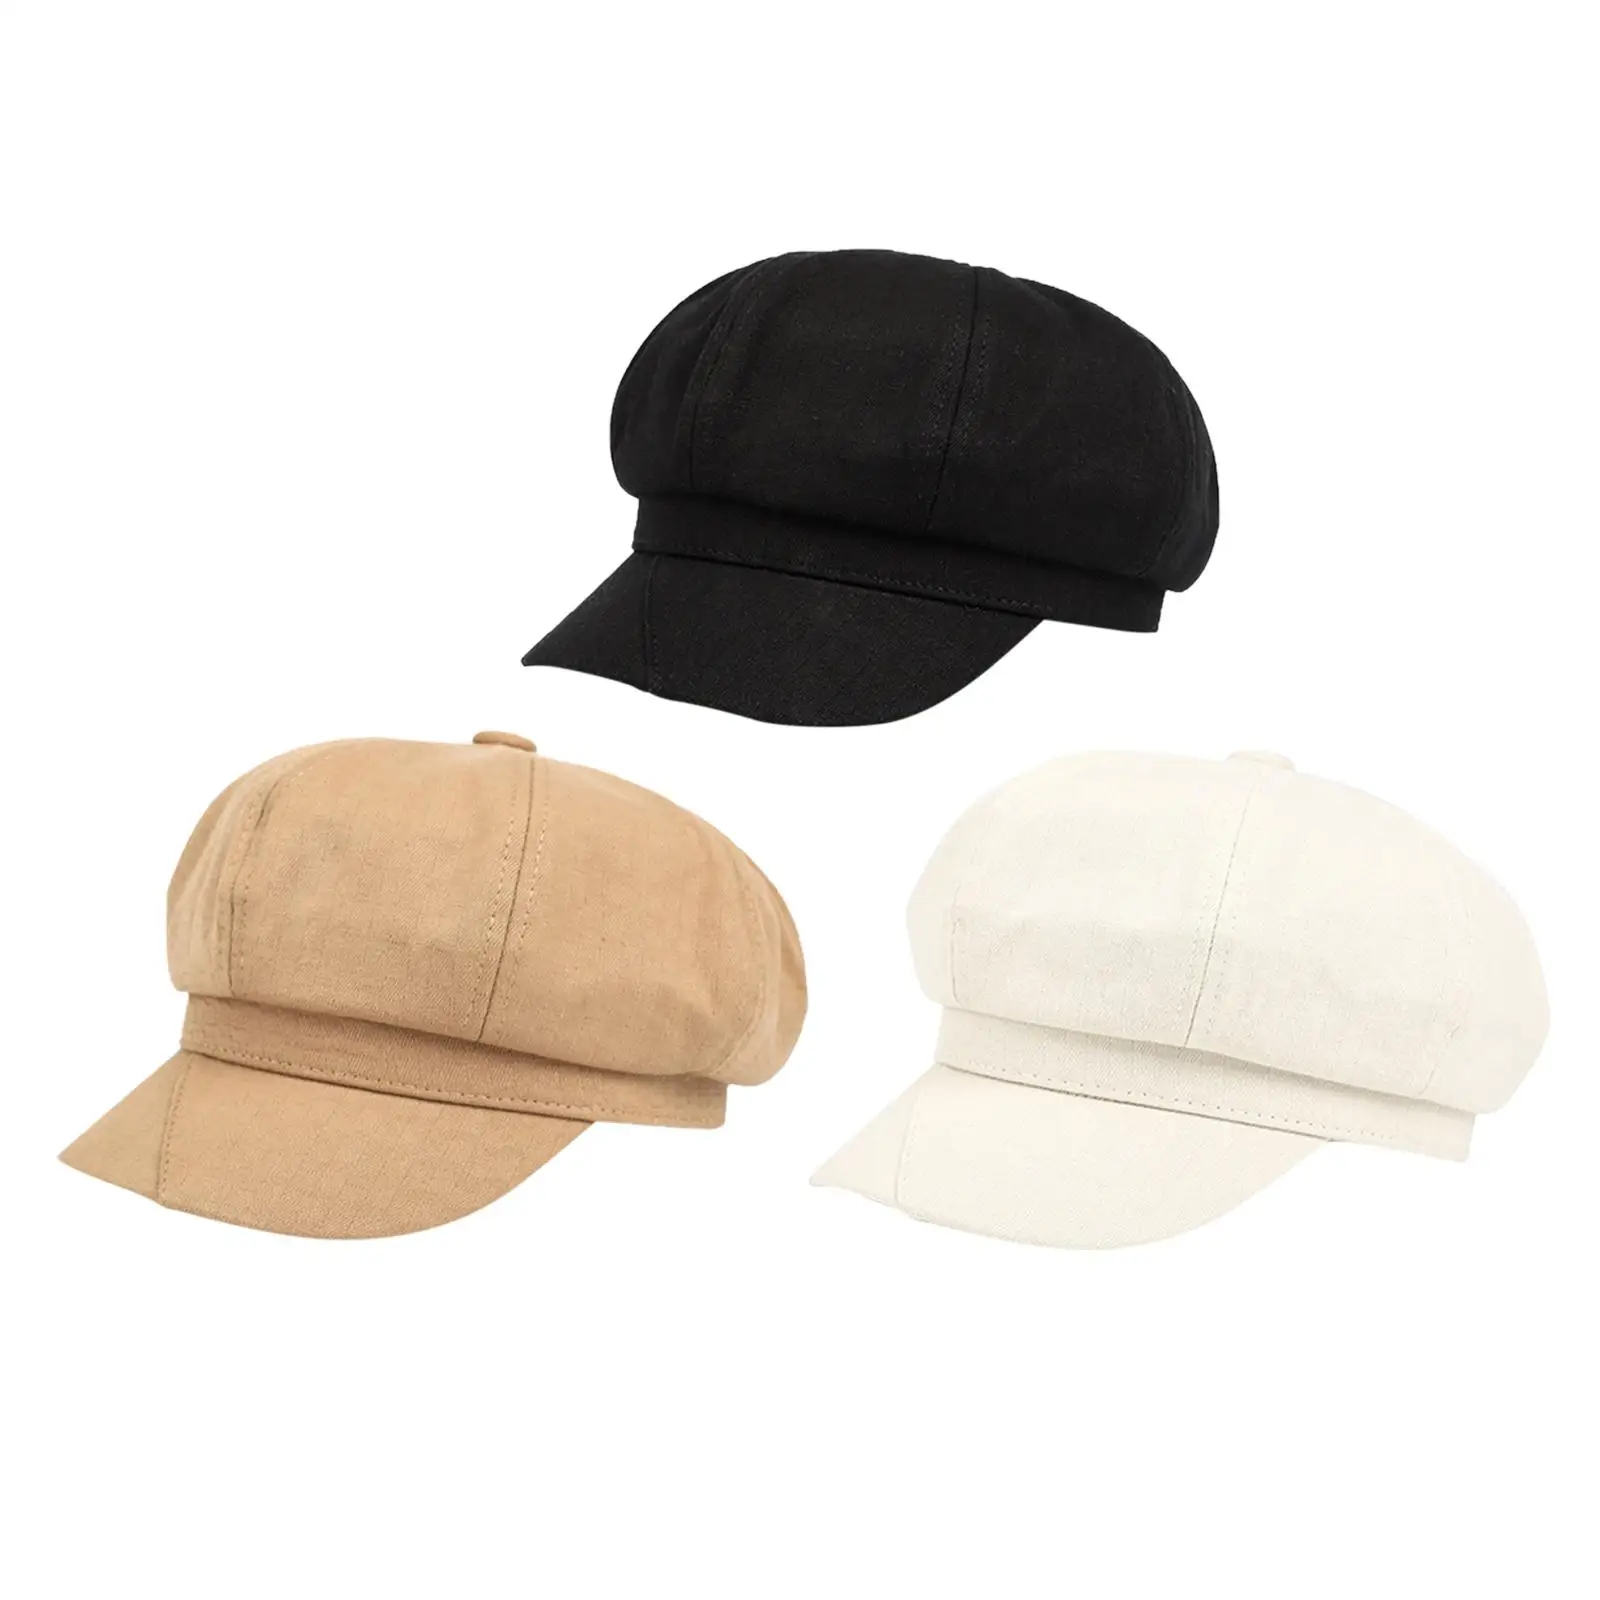 

Visor Hats for Women 8 Panels Adjustable Paperboy Hat Cabbie Hat Newsboy Hat for Fisherman Sailor Vacation painter